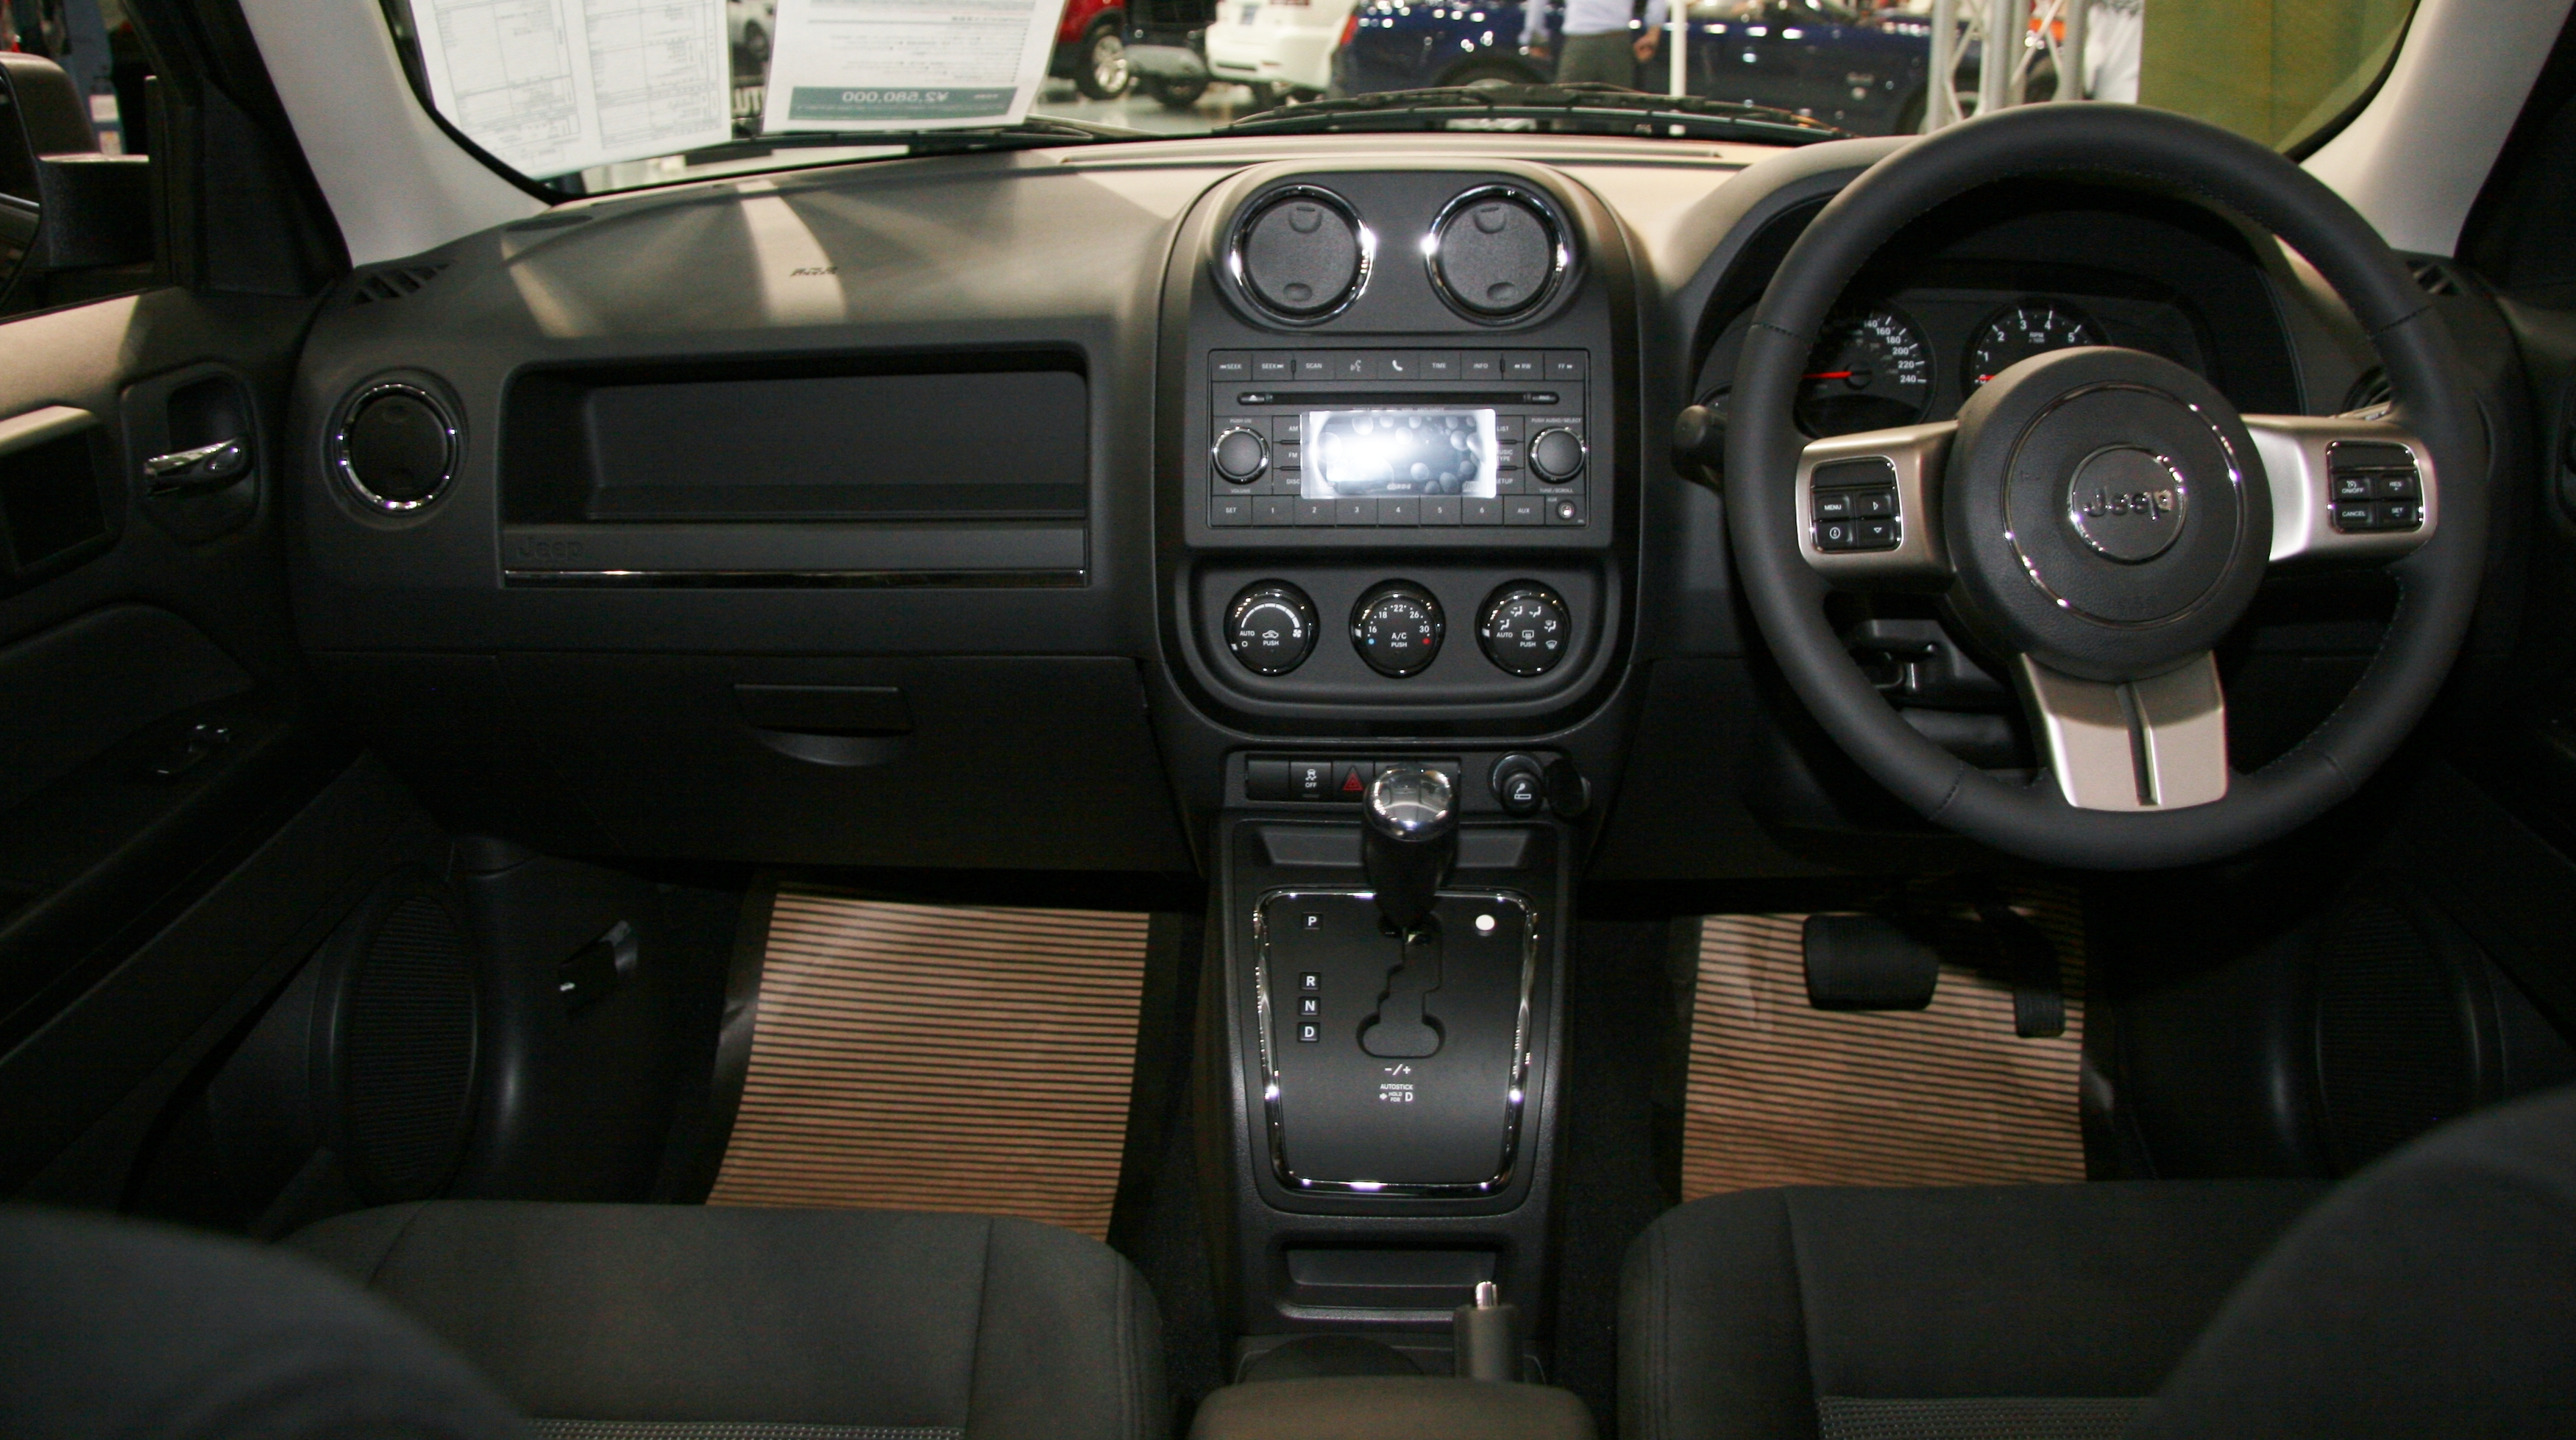 File:Jeep Patriot interior.jpg - Wikimedia Commons